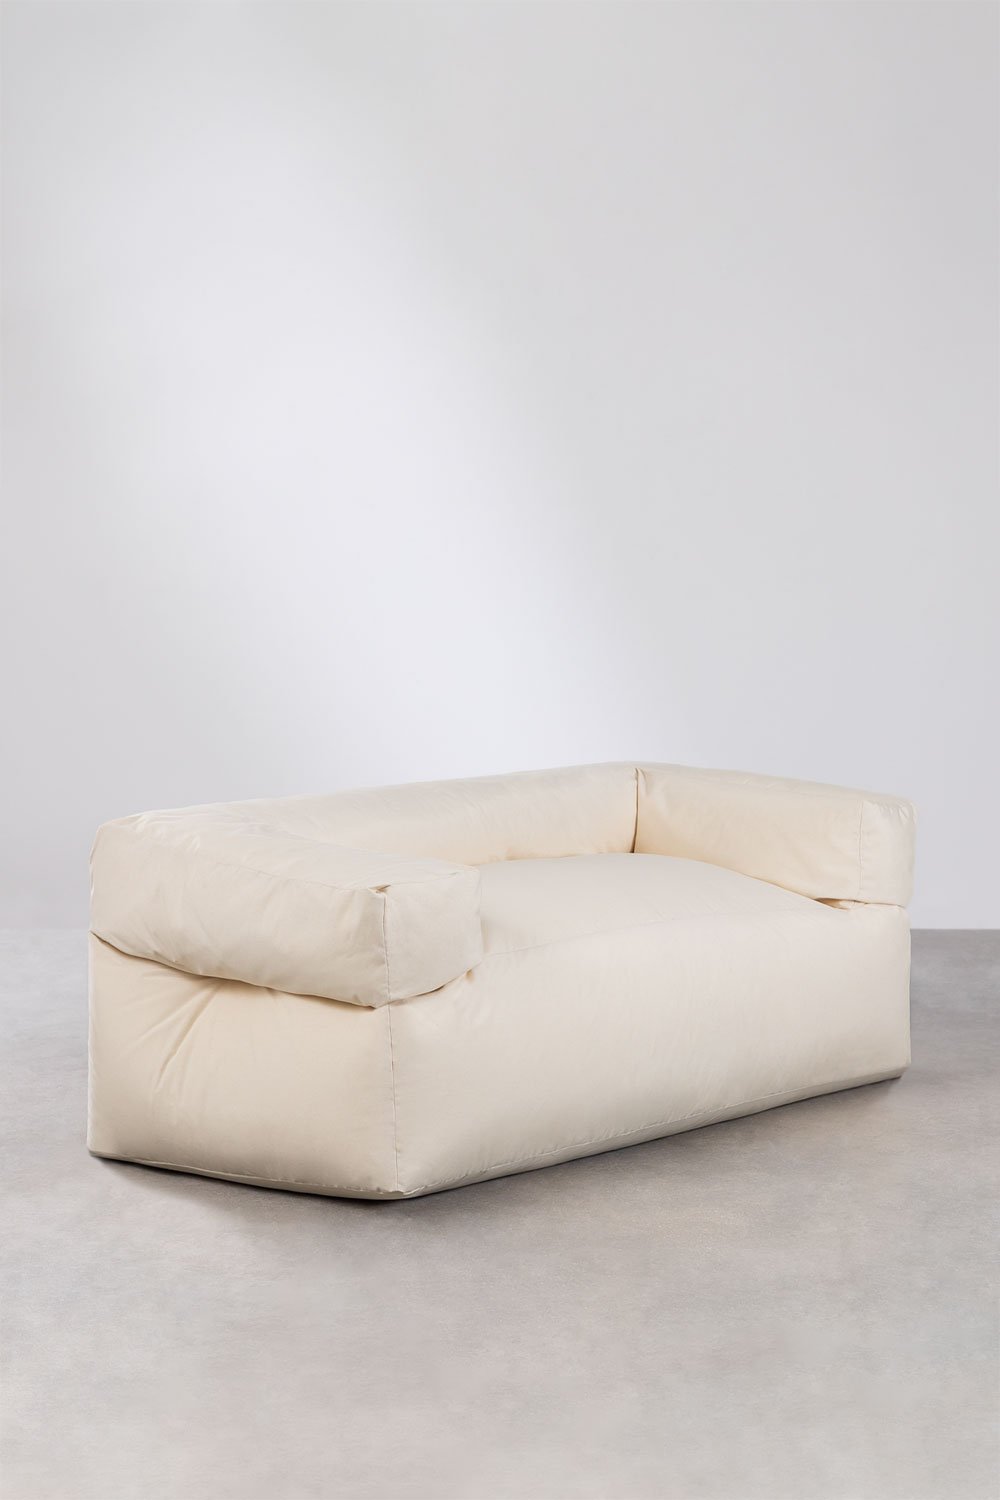 Darmian 2 Seater Sofa, gallery image 1